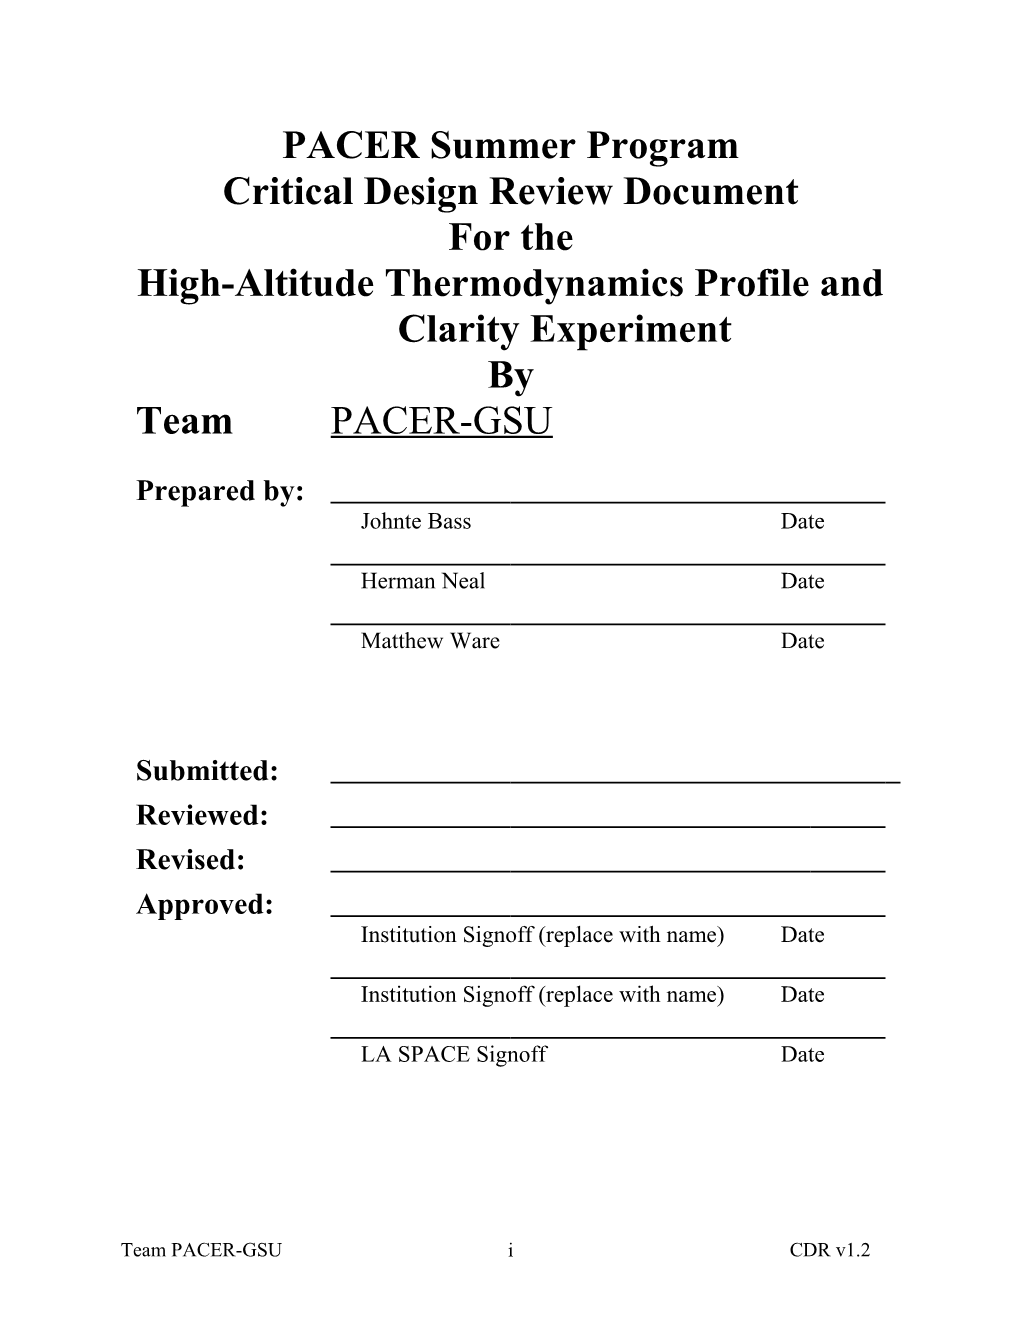 Critical Design Review Document